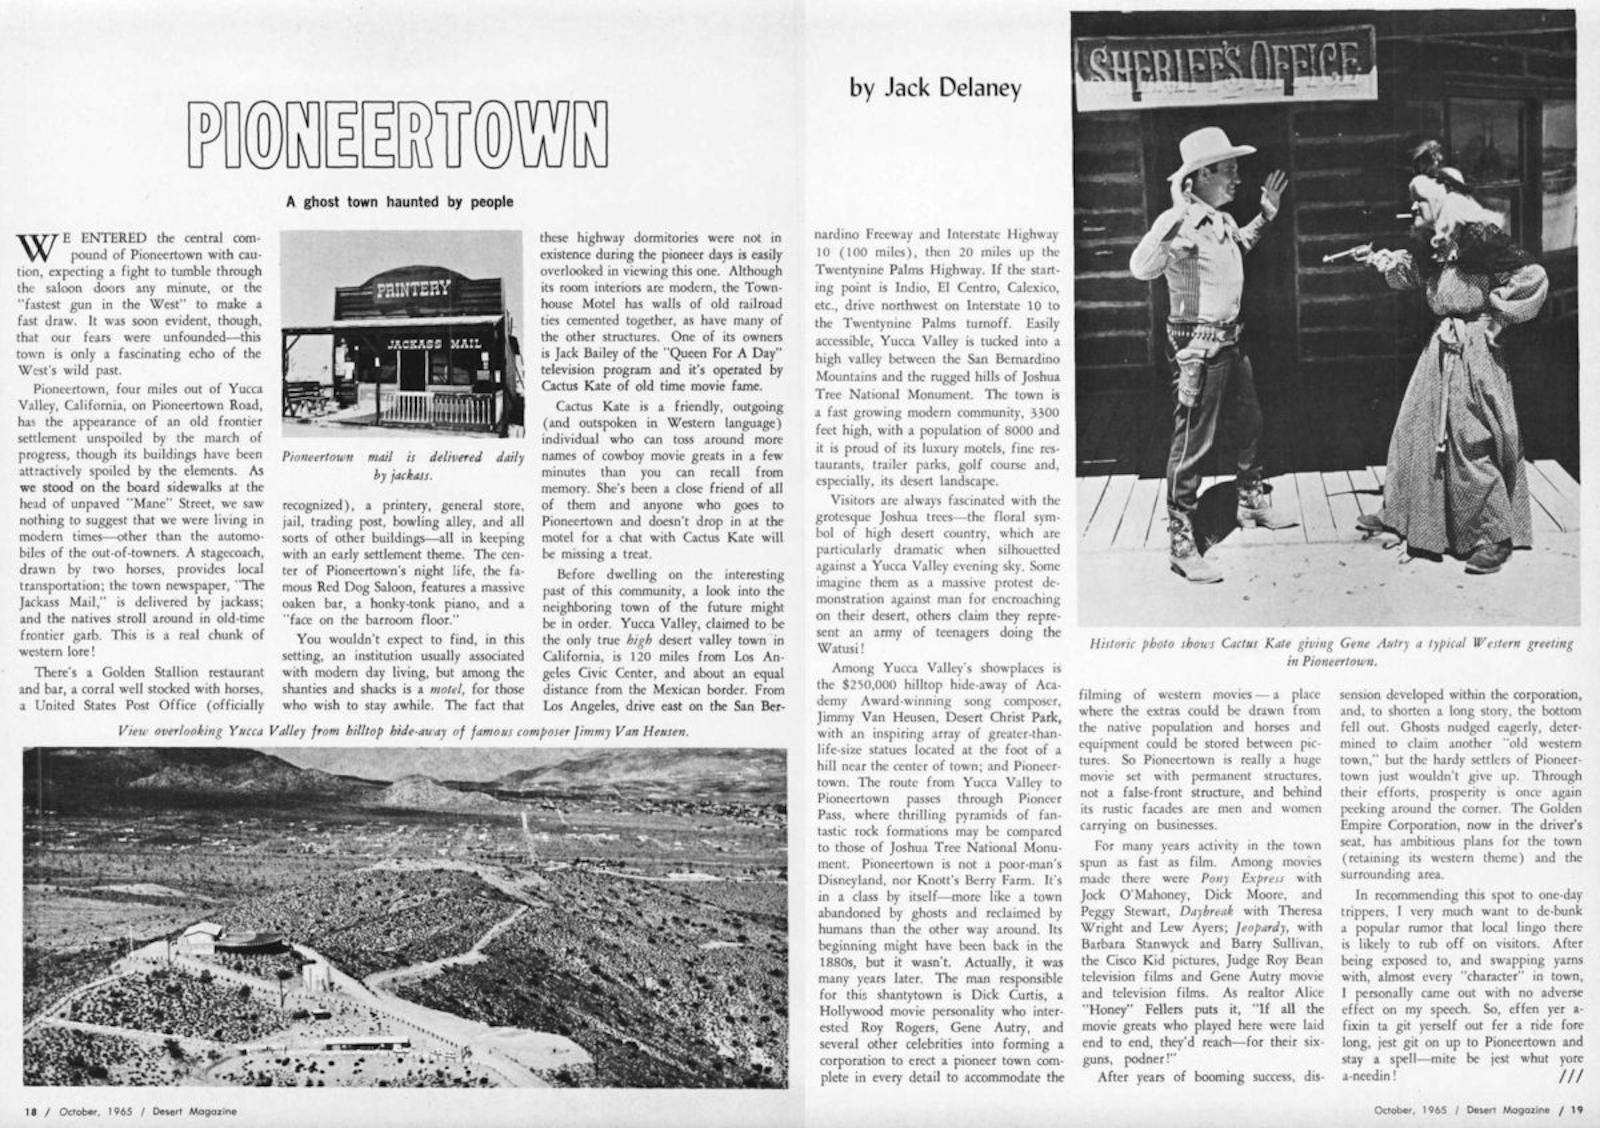 Oct. 1965 Desert Magazine article clipping